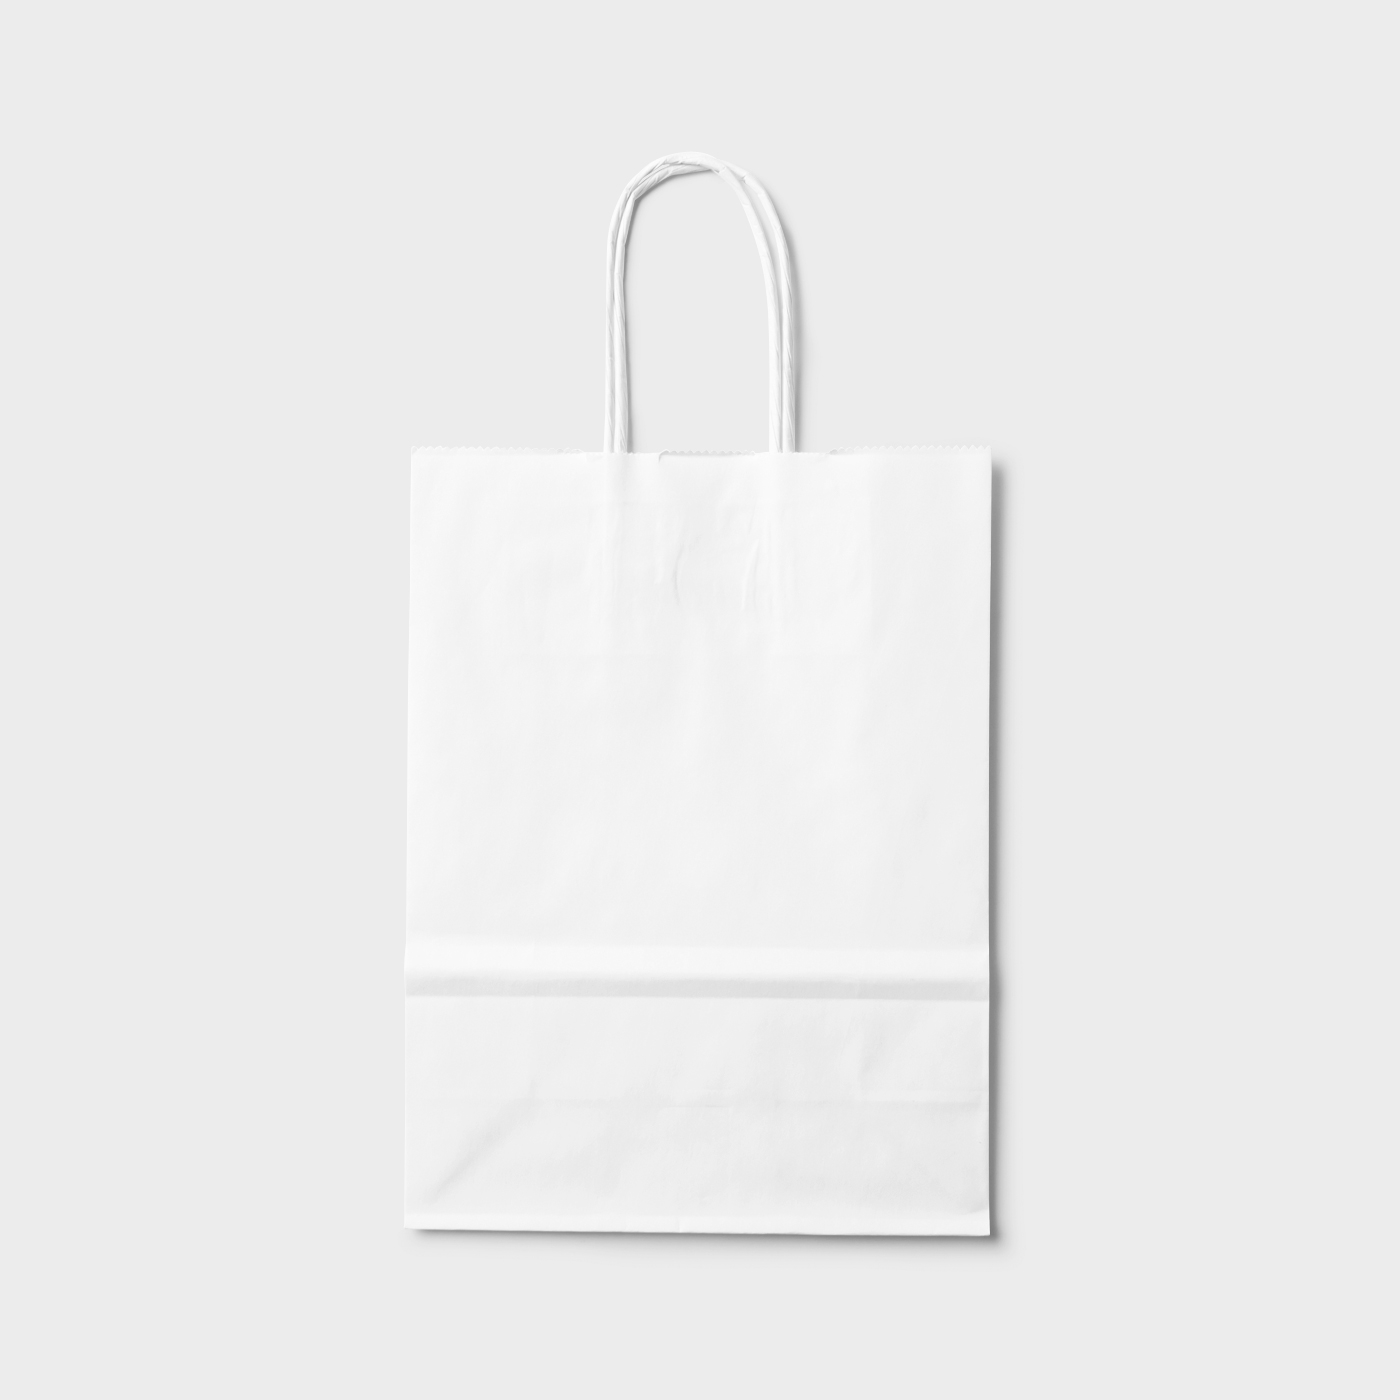 Close-up View of Shopping Paper Bag Mockup FREE PSD